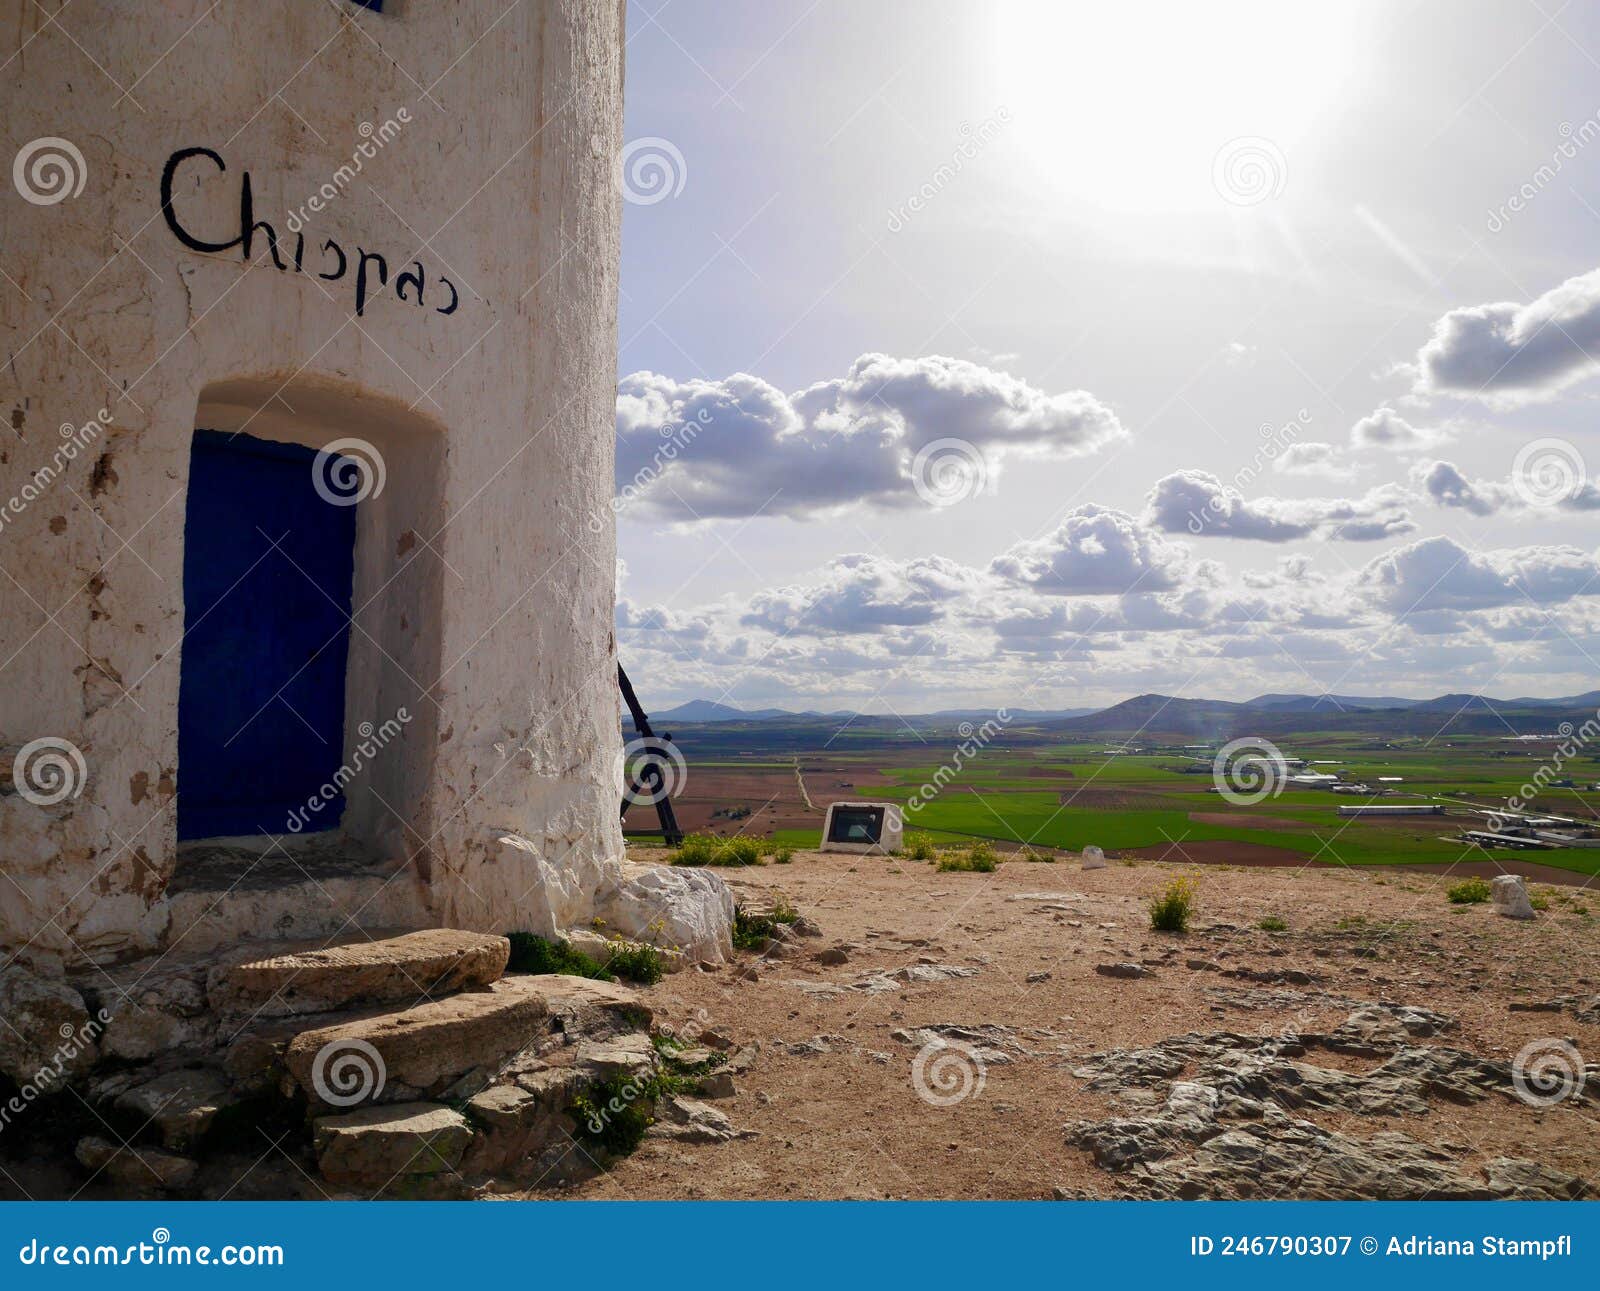 close up of blue entrance door of chispas windmill in consuegra, castile la mancha, spain.